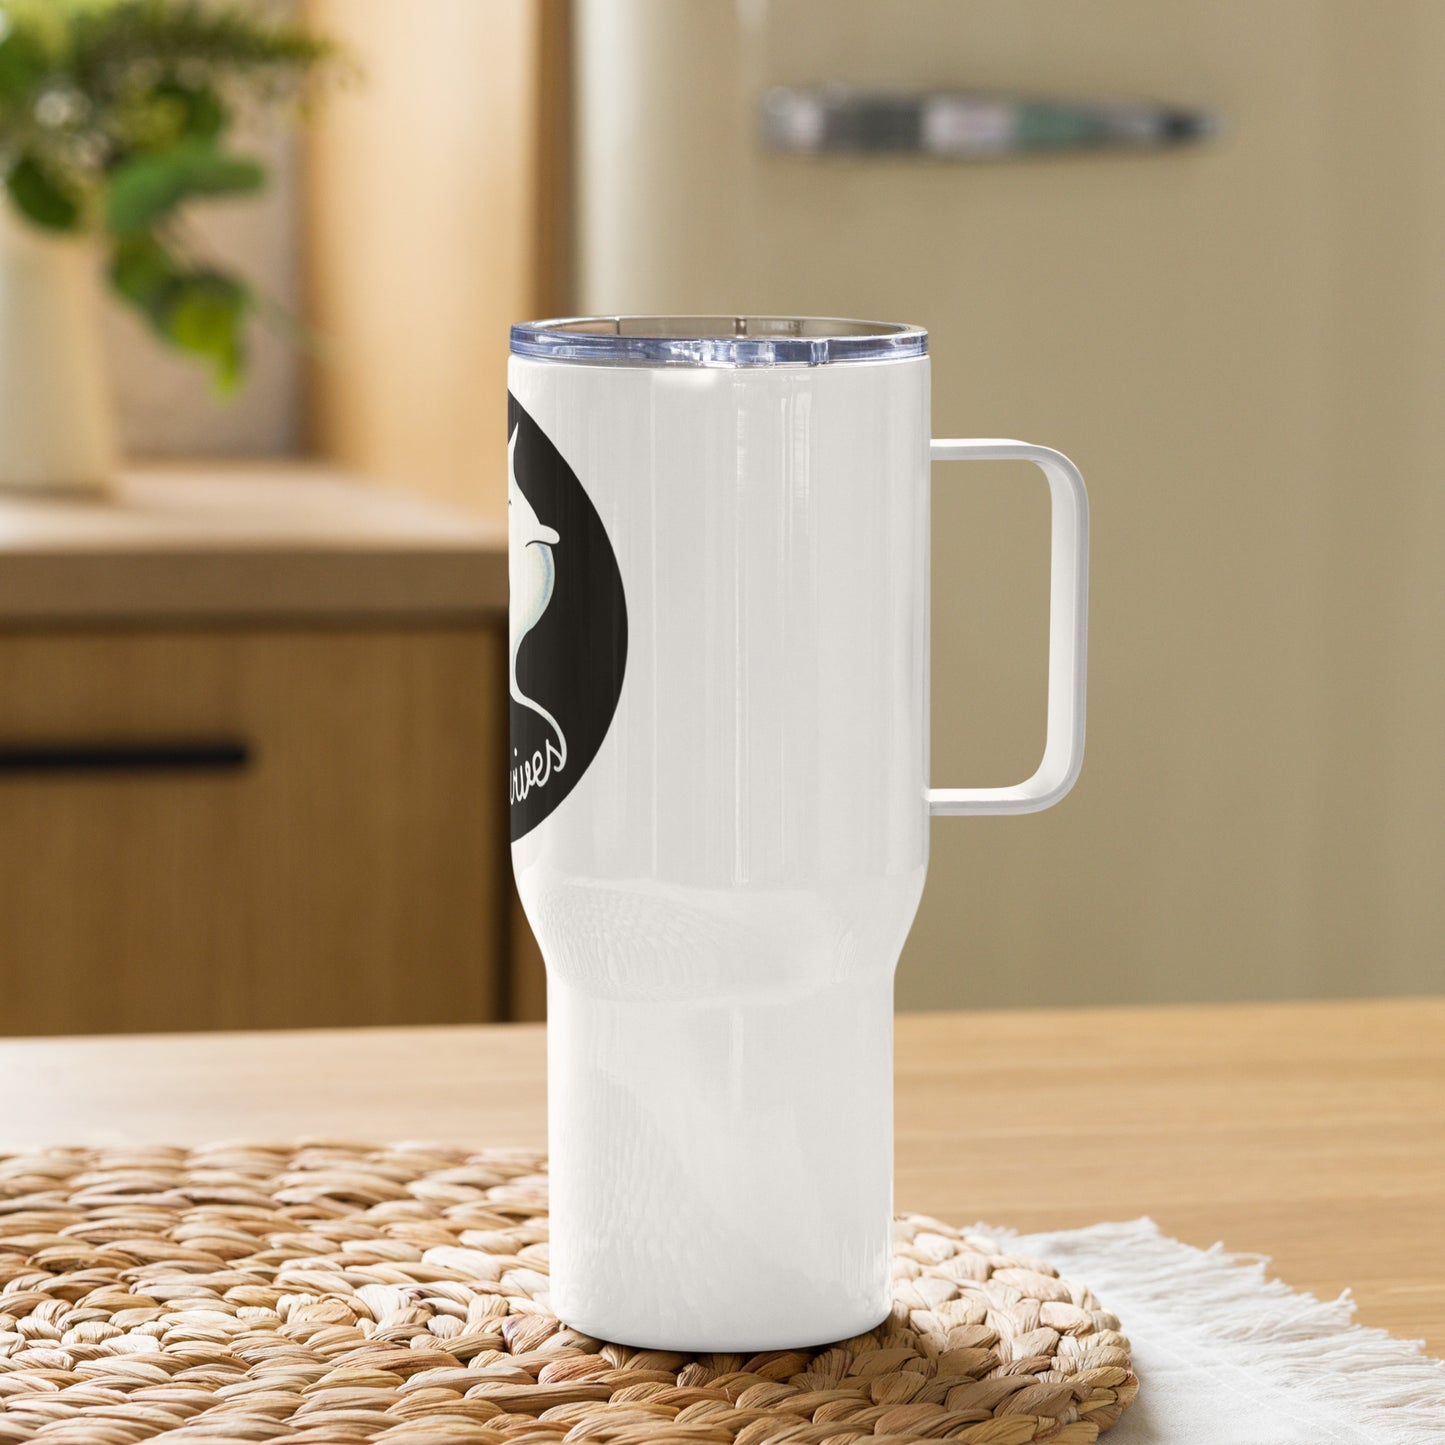 Ghostie Travel mug with a handle